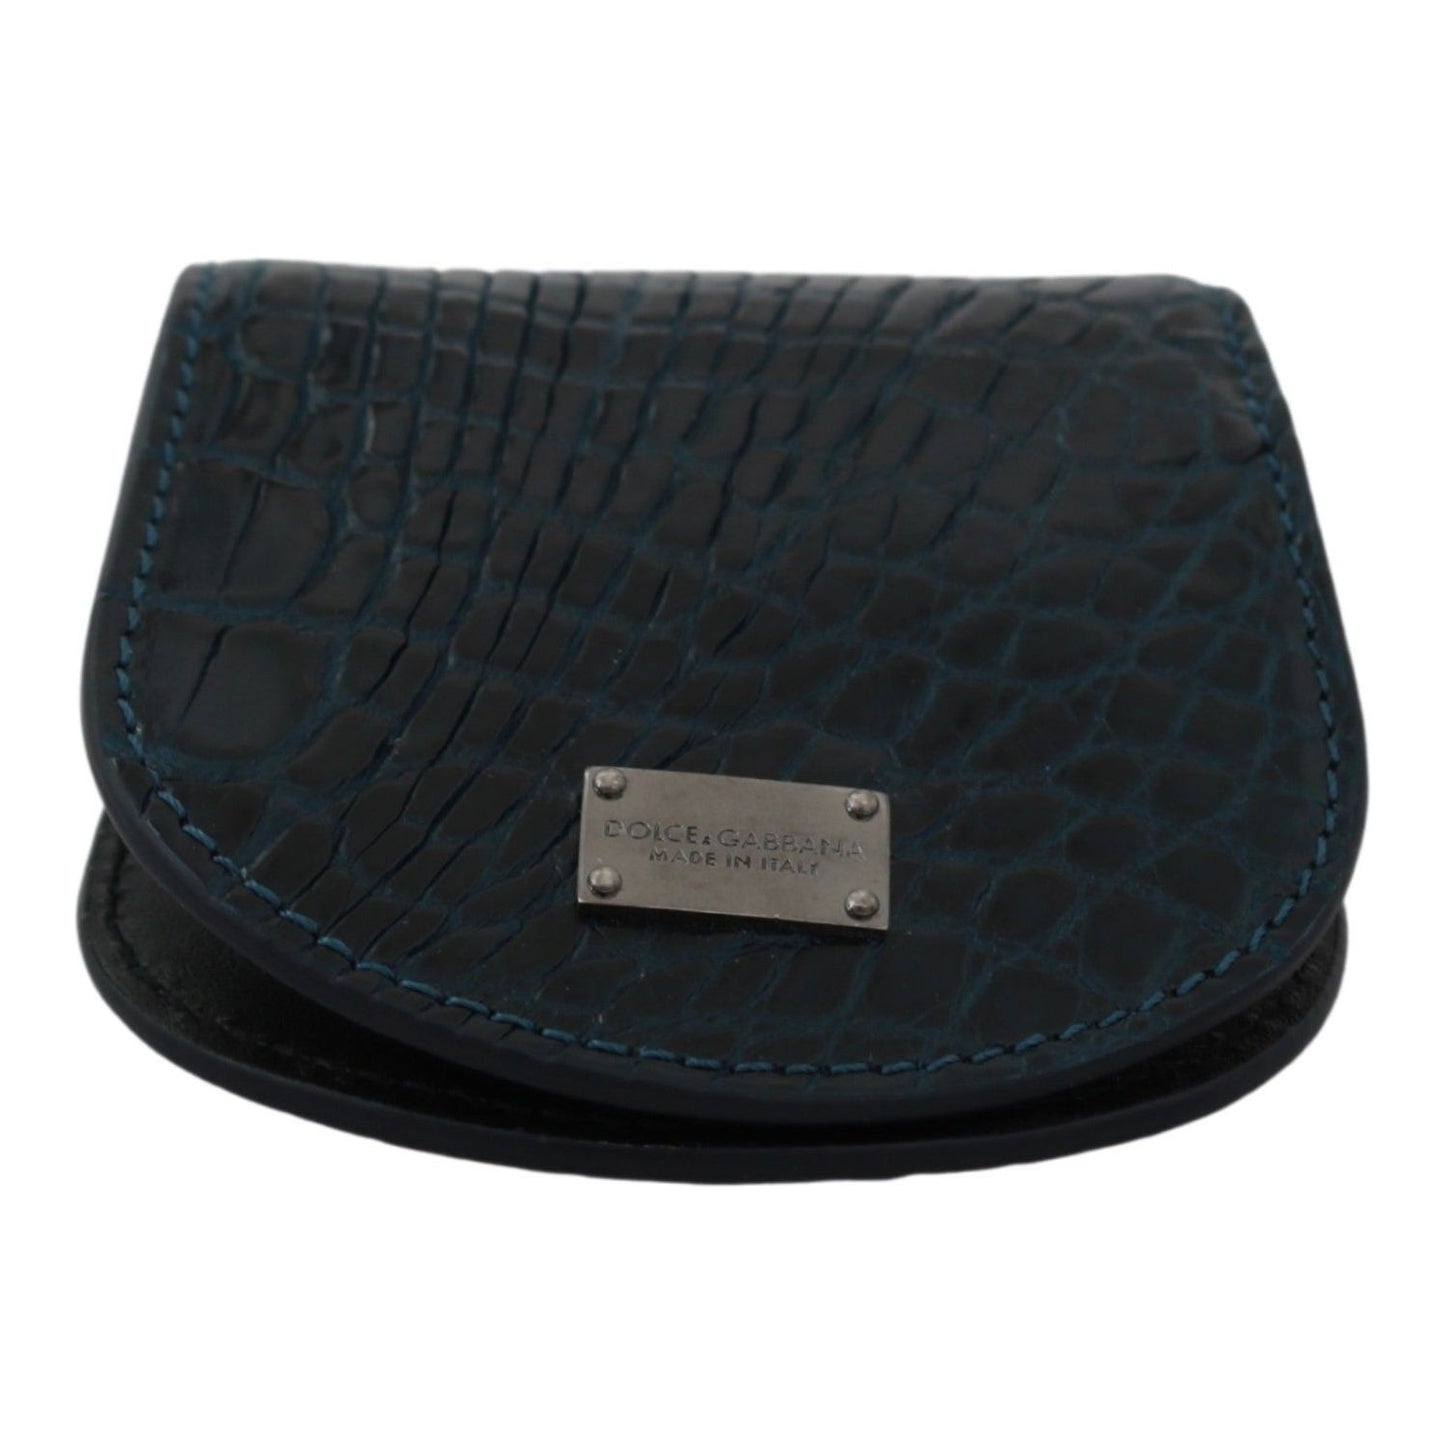 Dolce & Gabbana Exquisite Dark Blue Coin Case Wallet blue-exotic-skins-condom-case-holder-pocket Condom Case IMG_0250-9c1282d7-980.jpg